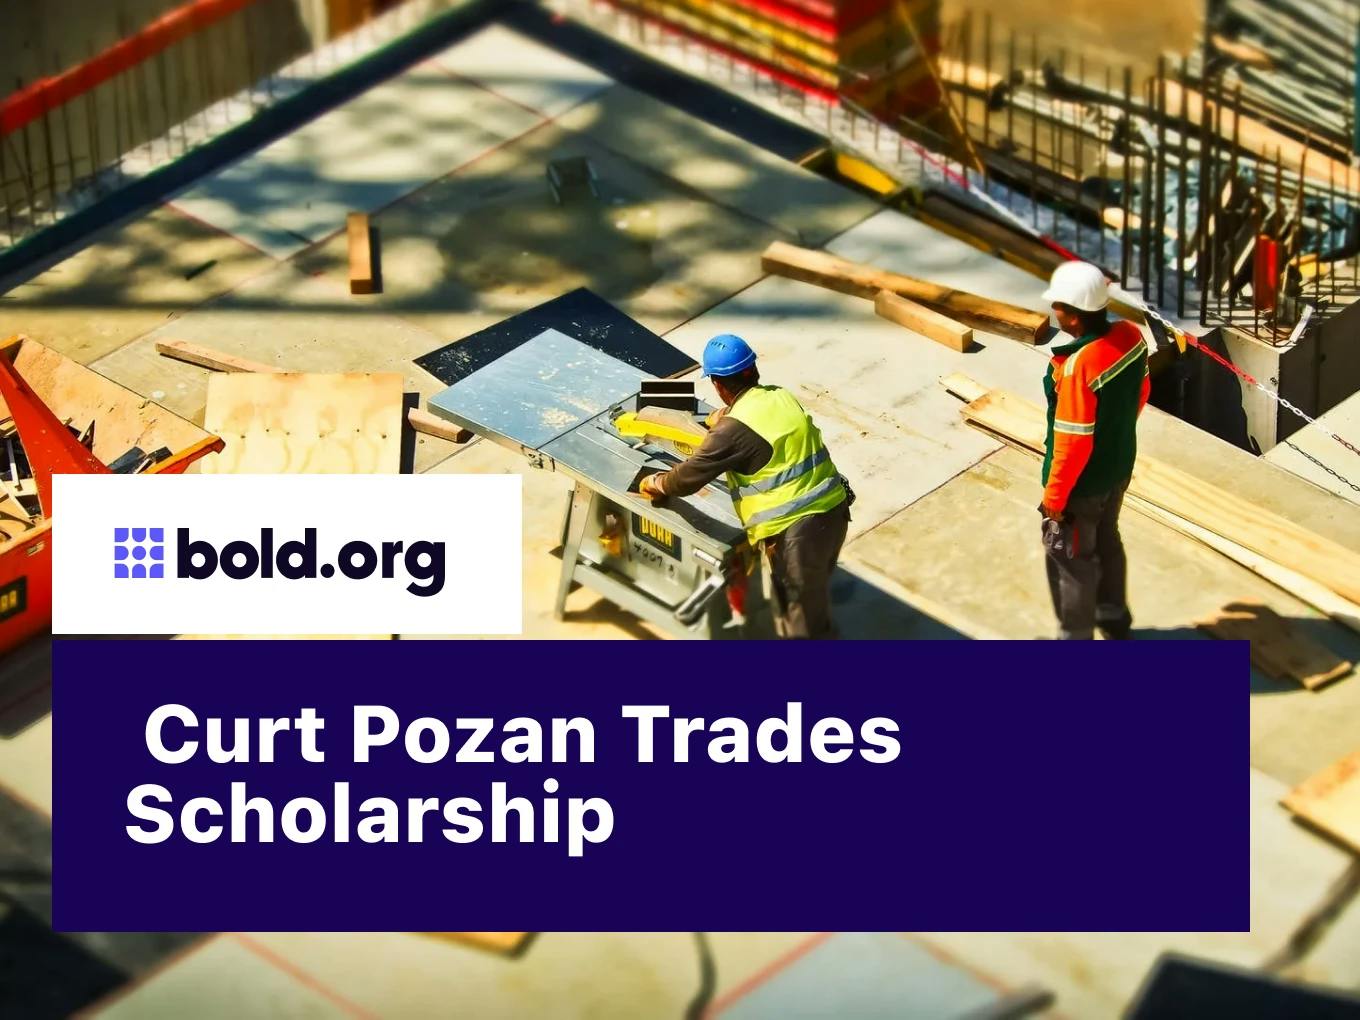 Curt Pozan Trades Scholarship